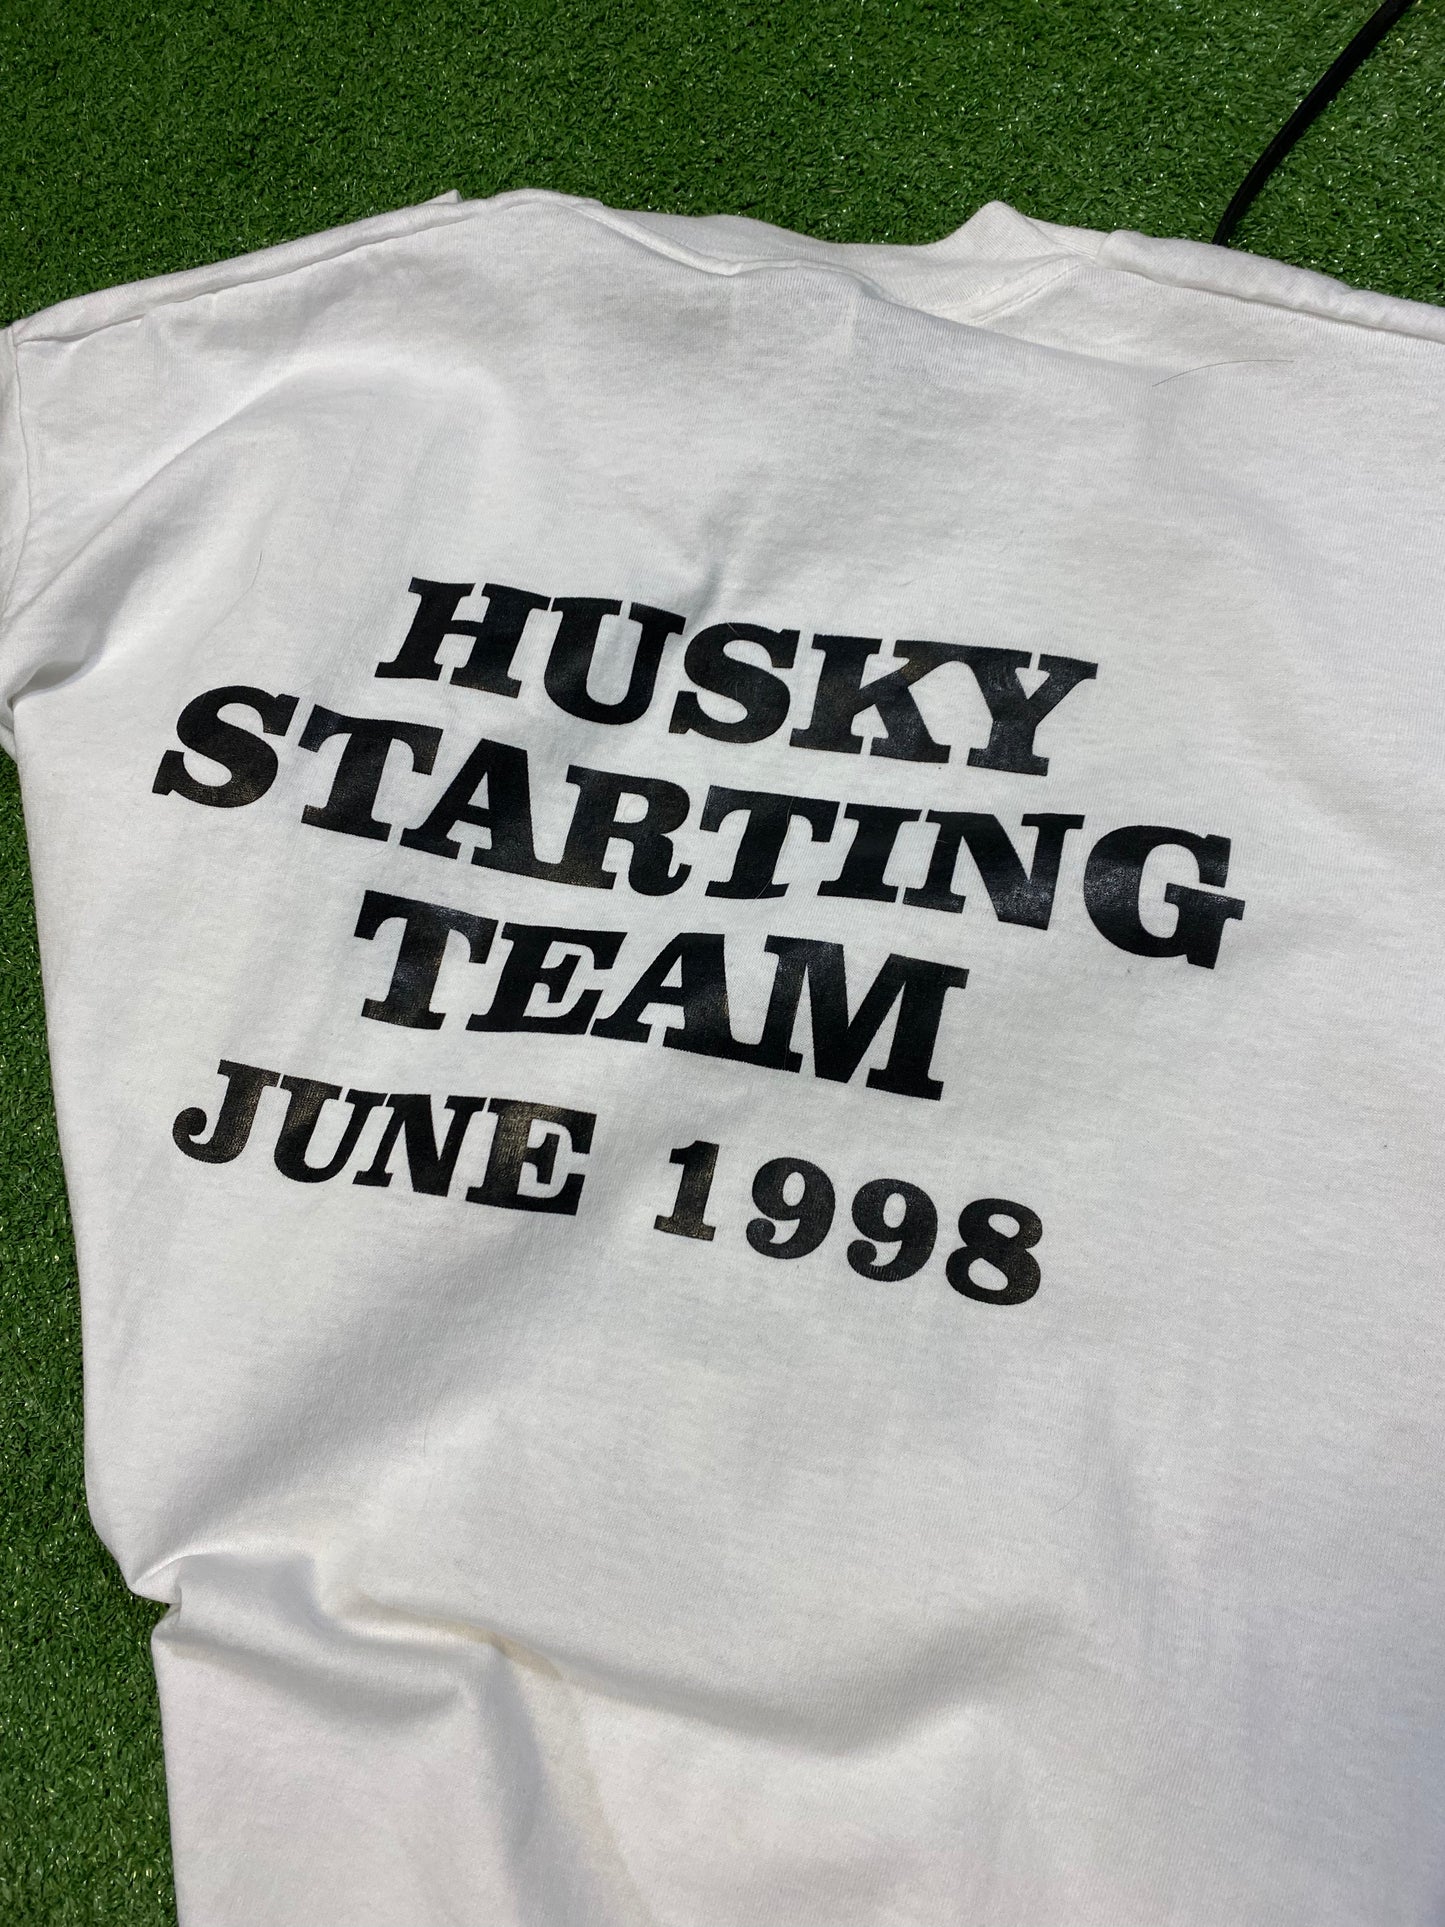 1998 Husky Healthcare T-Shirt